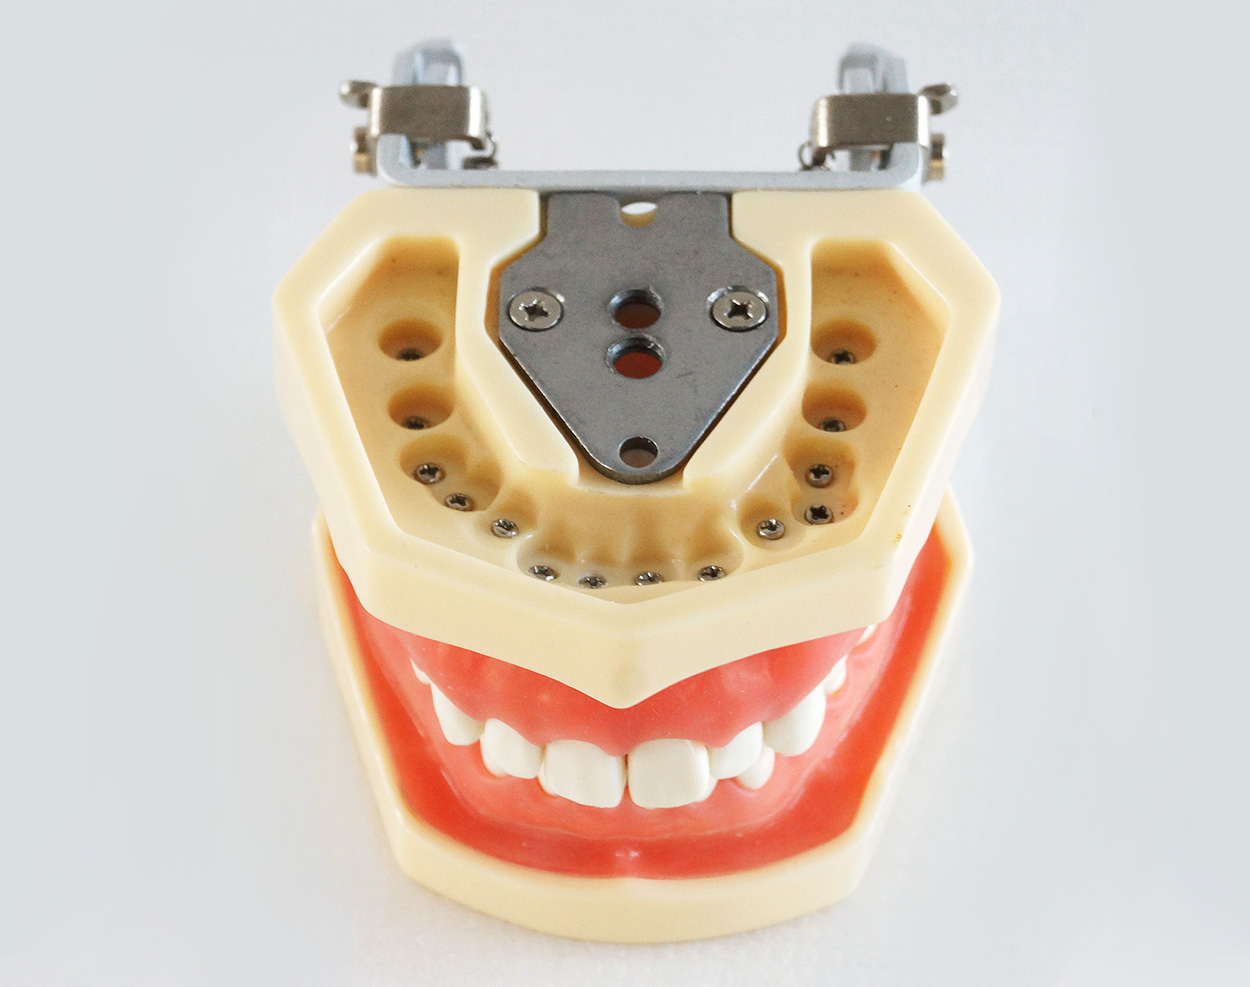 TM-A14 Dental Standard Teeth Model Study And Teach Model Soft Gum With Articulator SCREW FIX